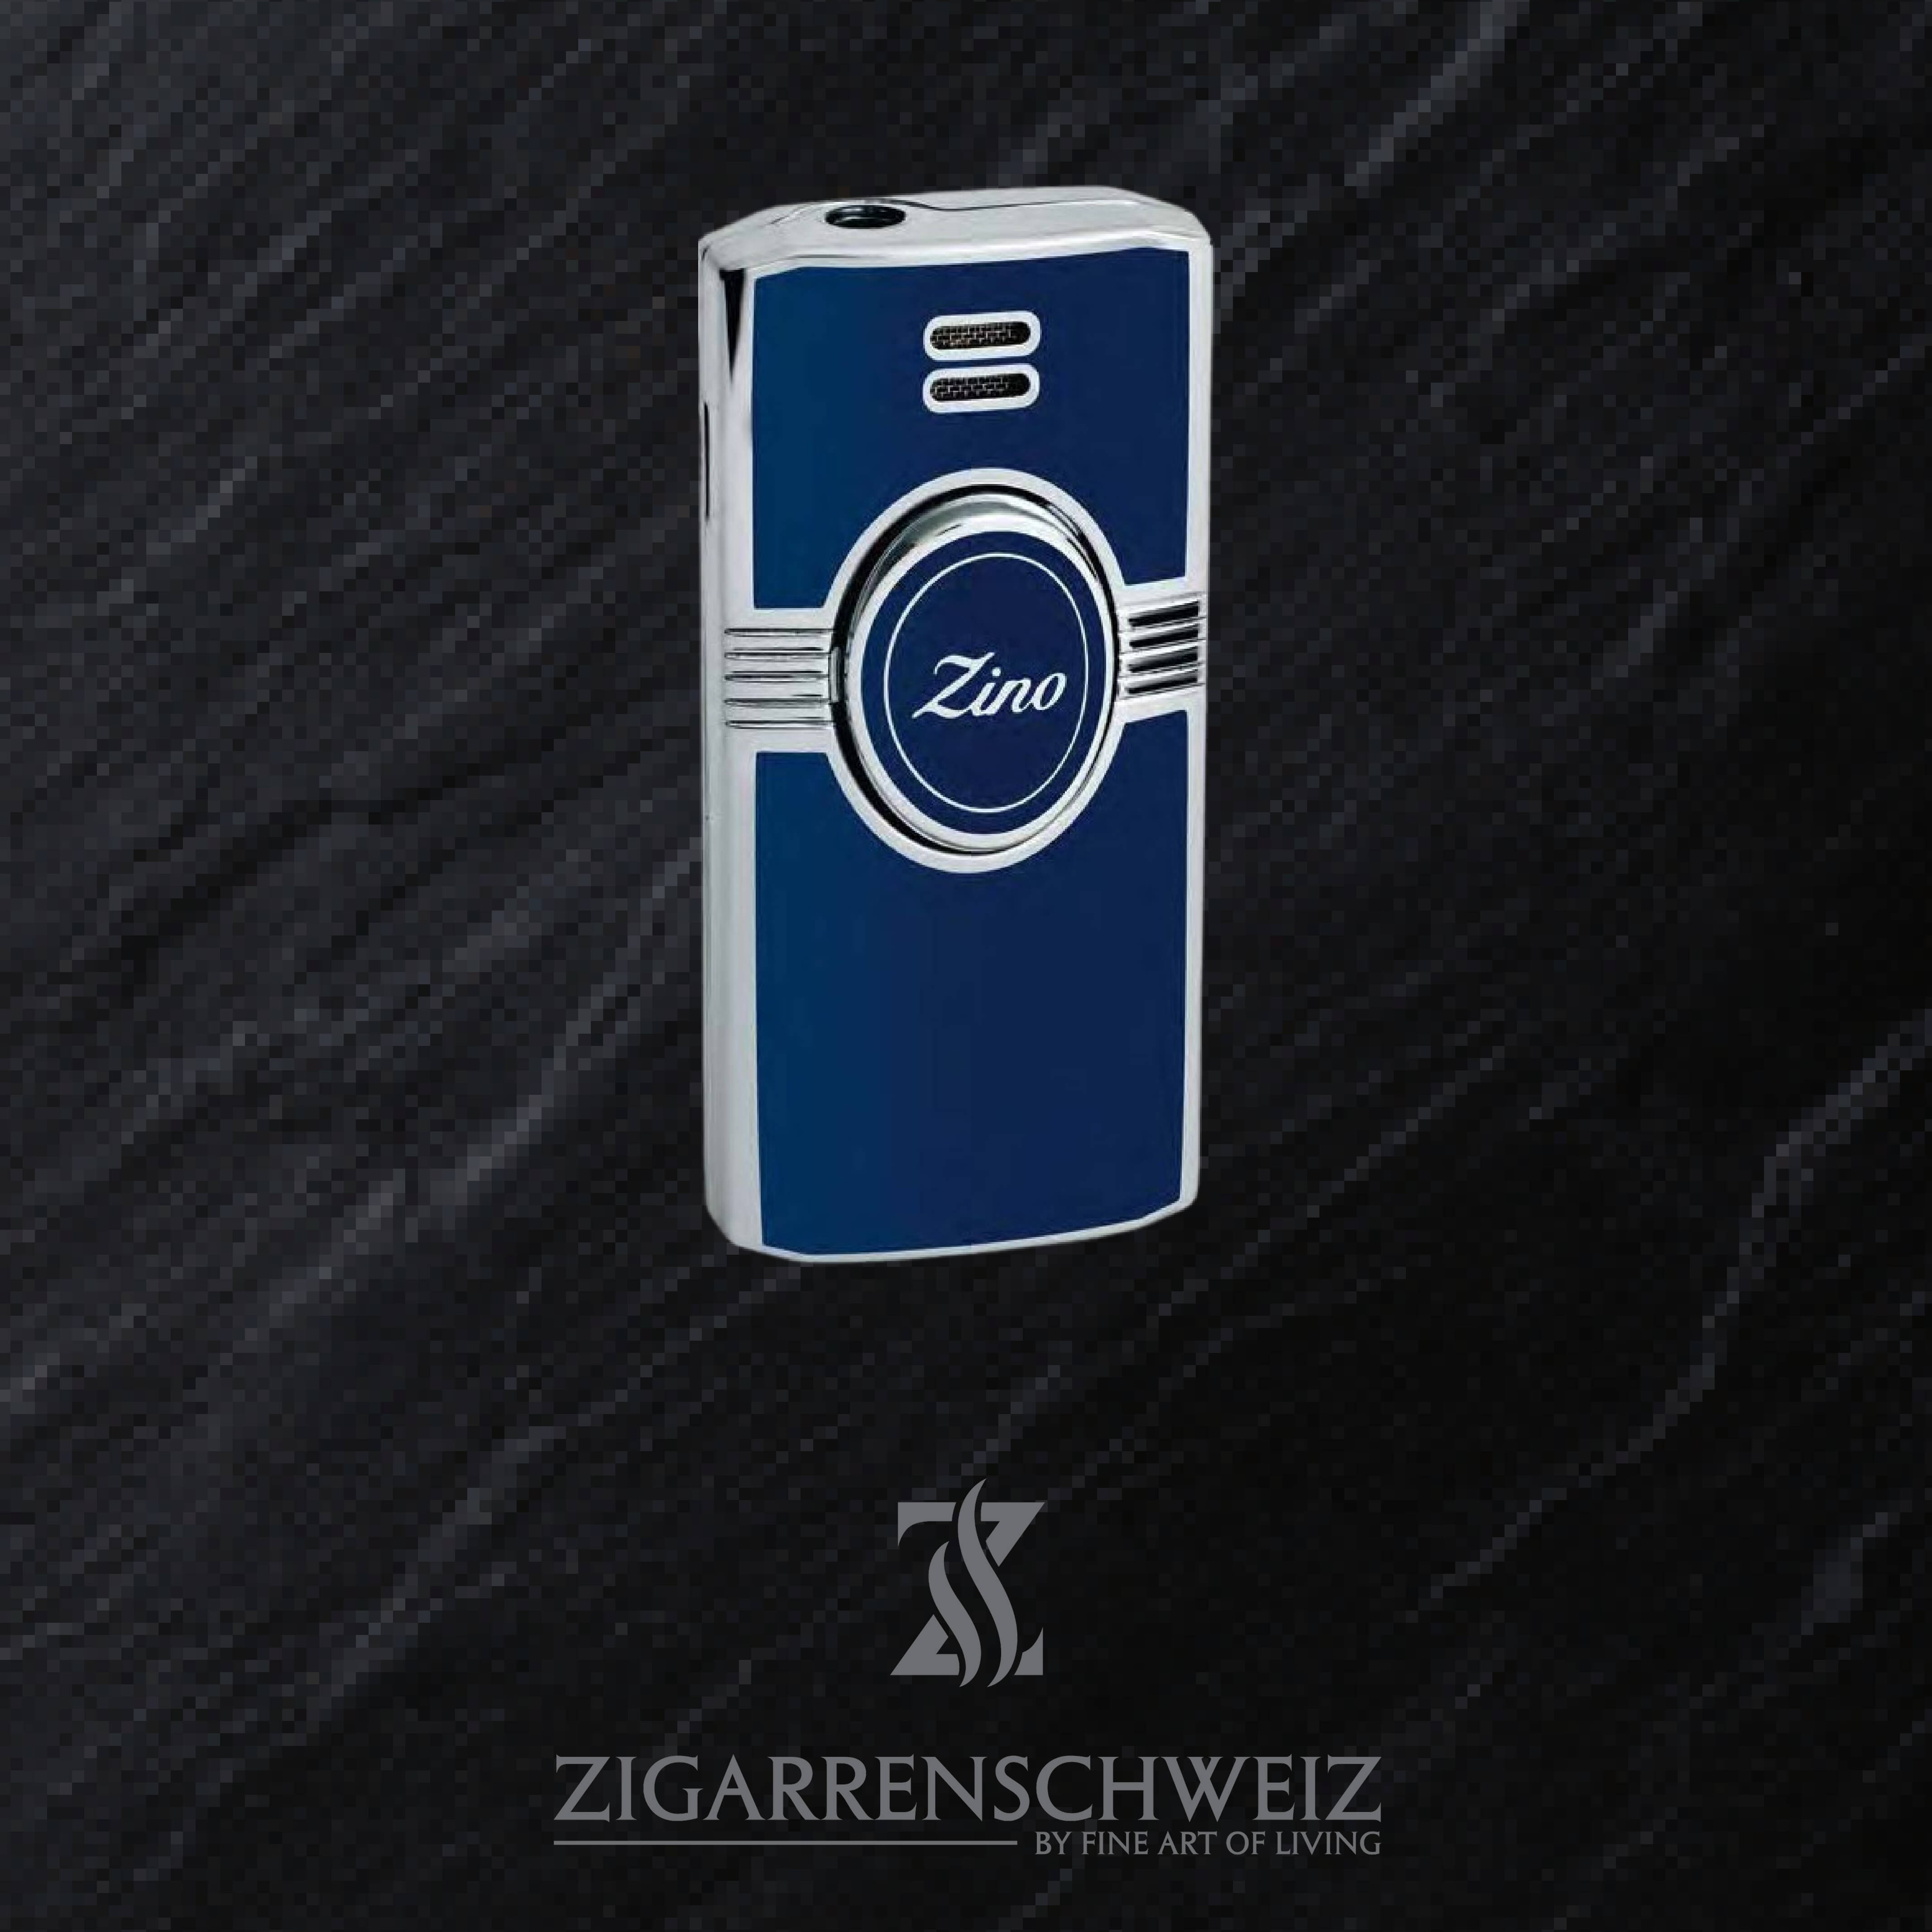 Zino Jet Flame Feuerzeug für Zigarren mit Lederetui, Farbe: Blau